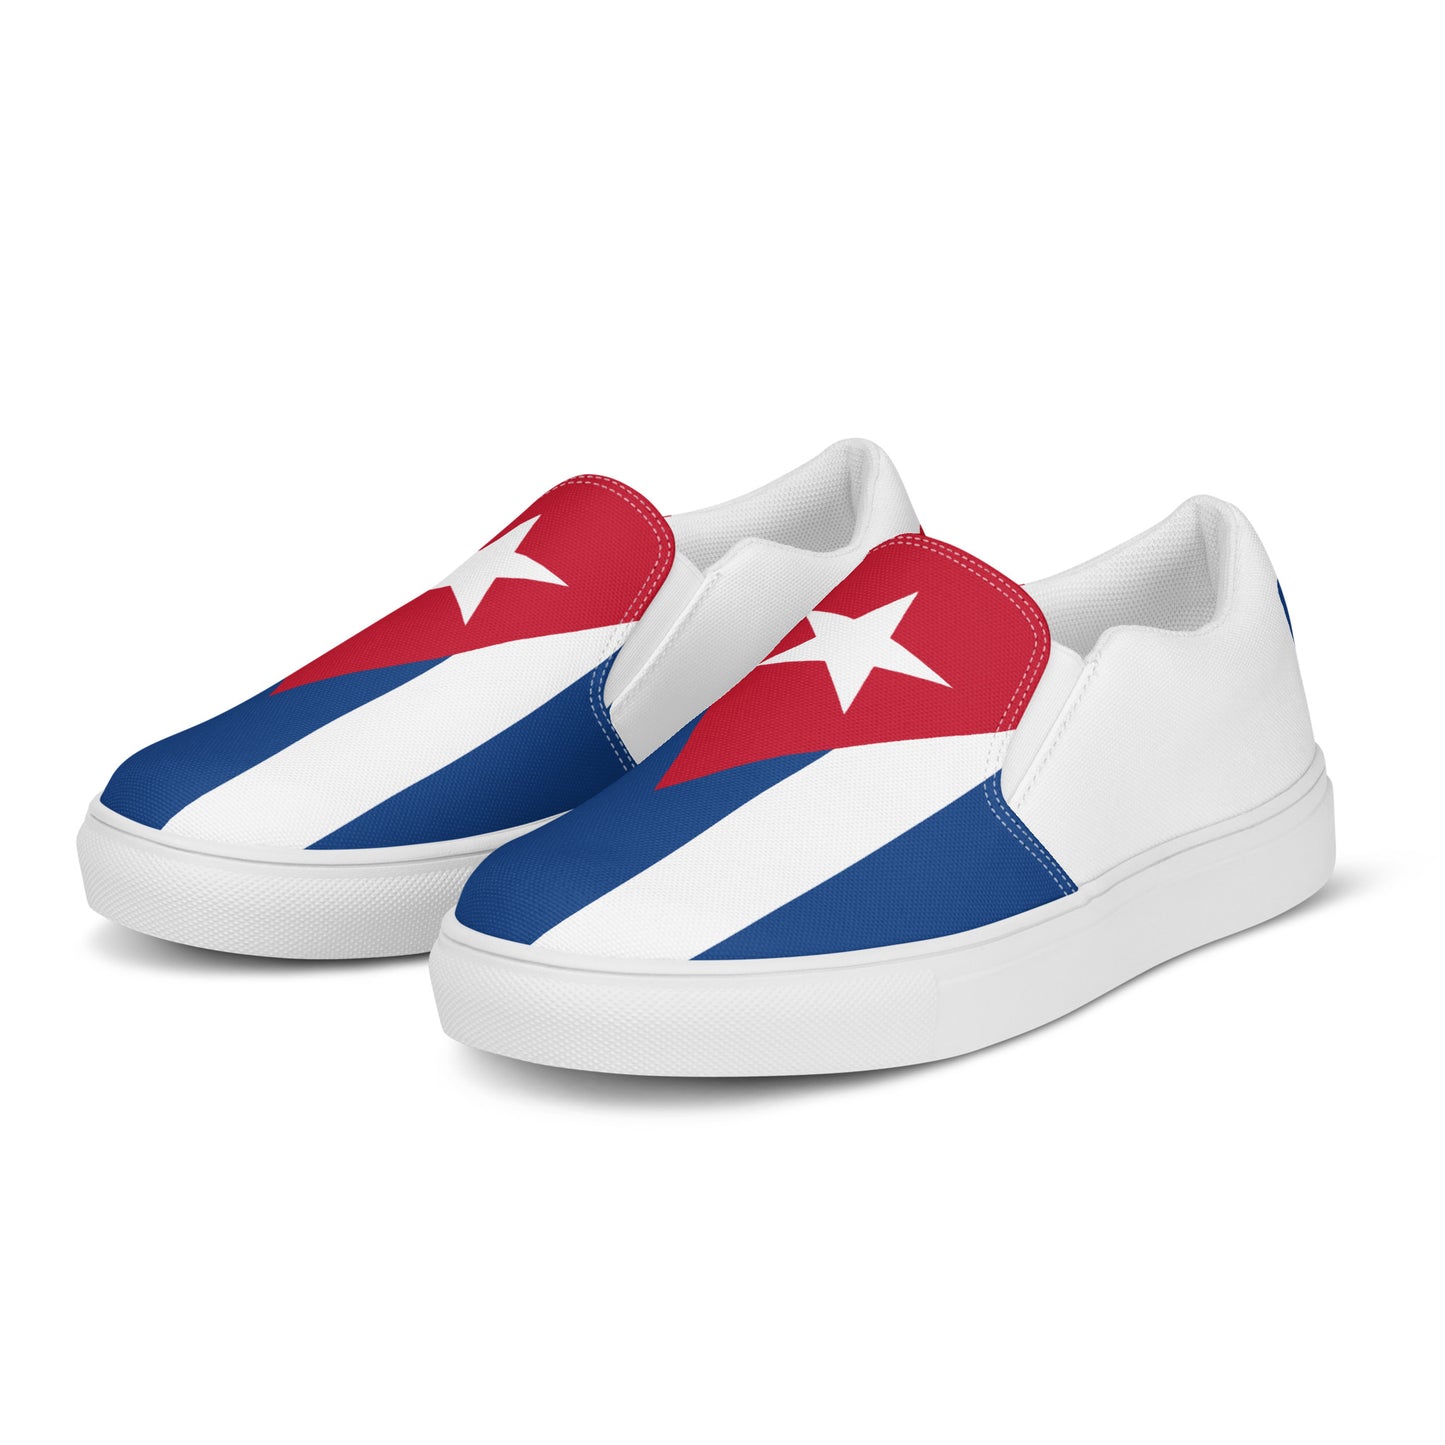 Cuba - Men - Bandera - Slip-on shoes